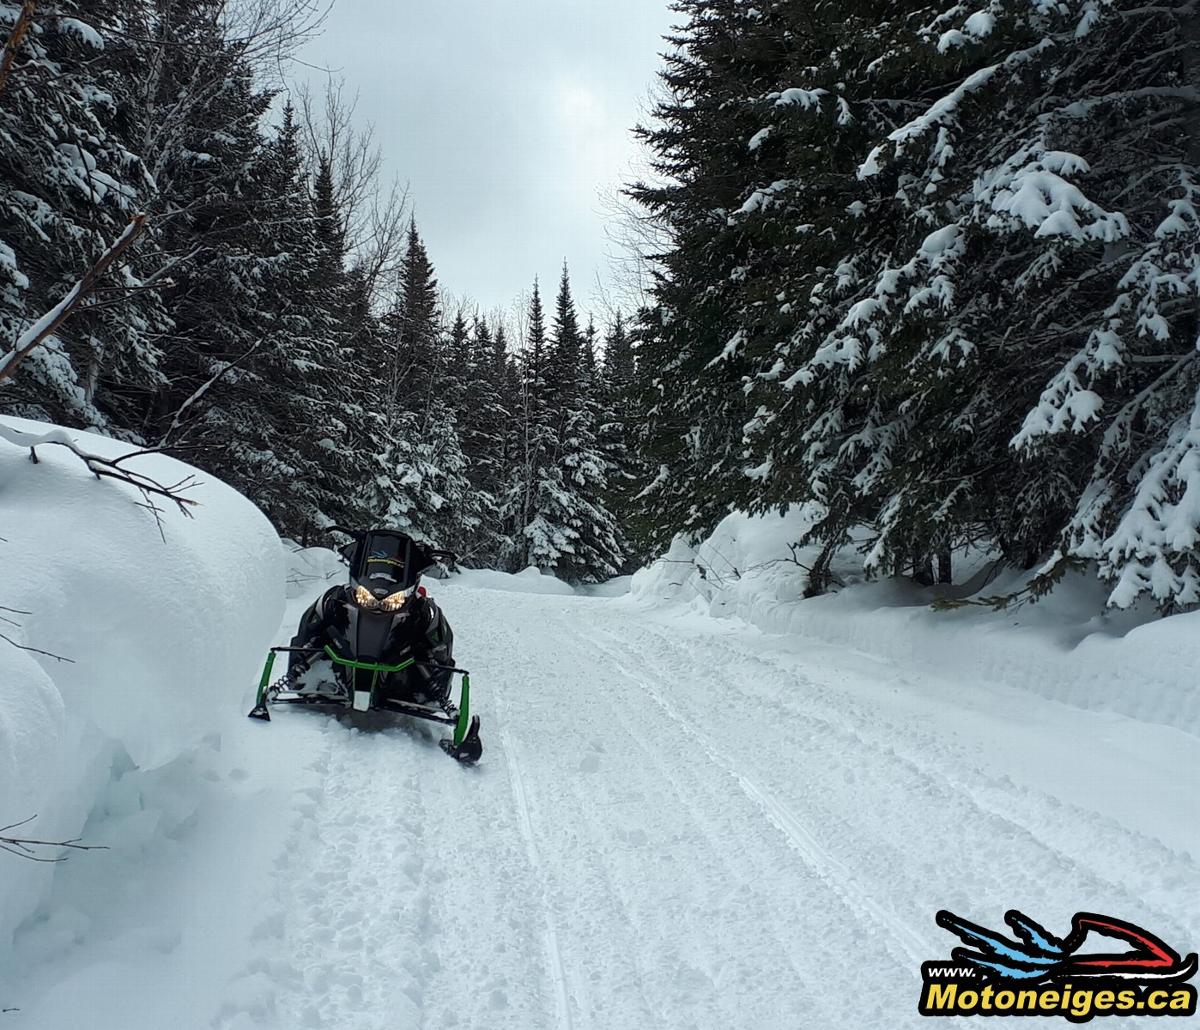 Gaspésie in 3 days! Is it possible? - snowmobiles - snowmobilers